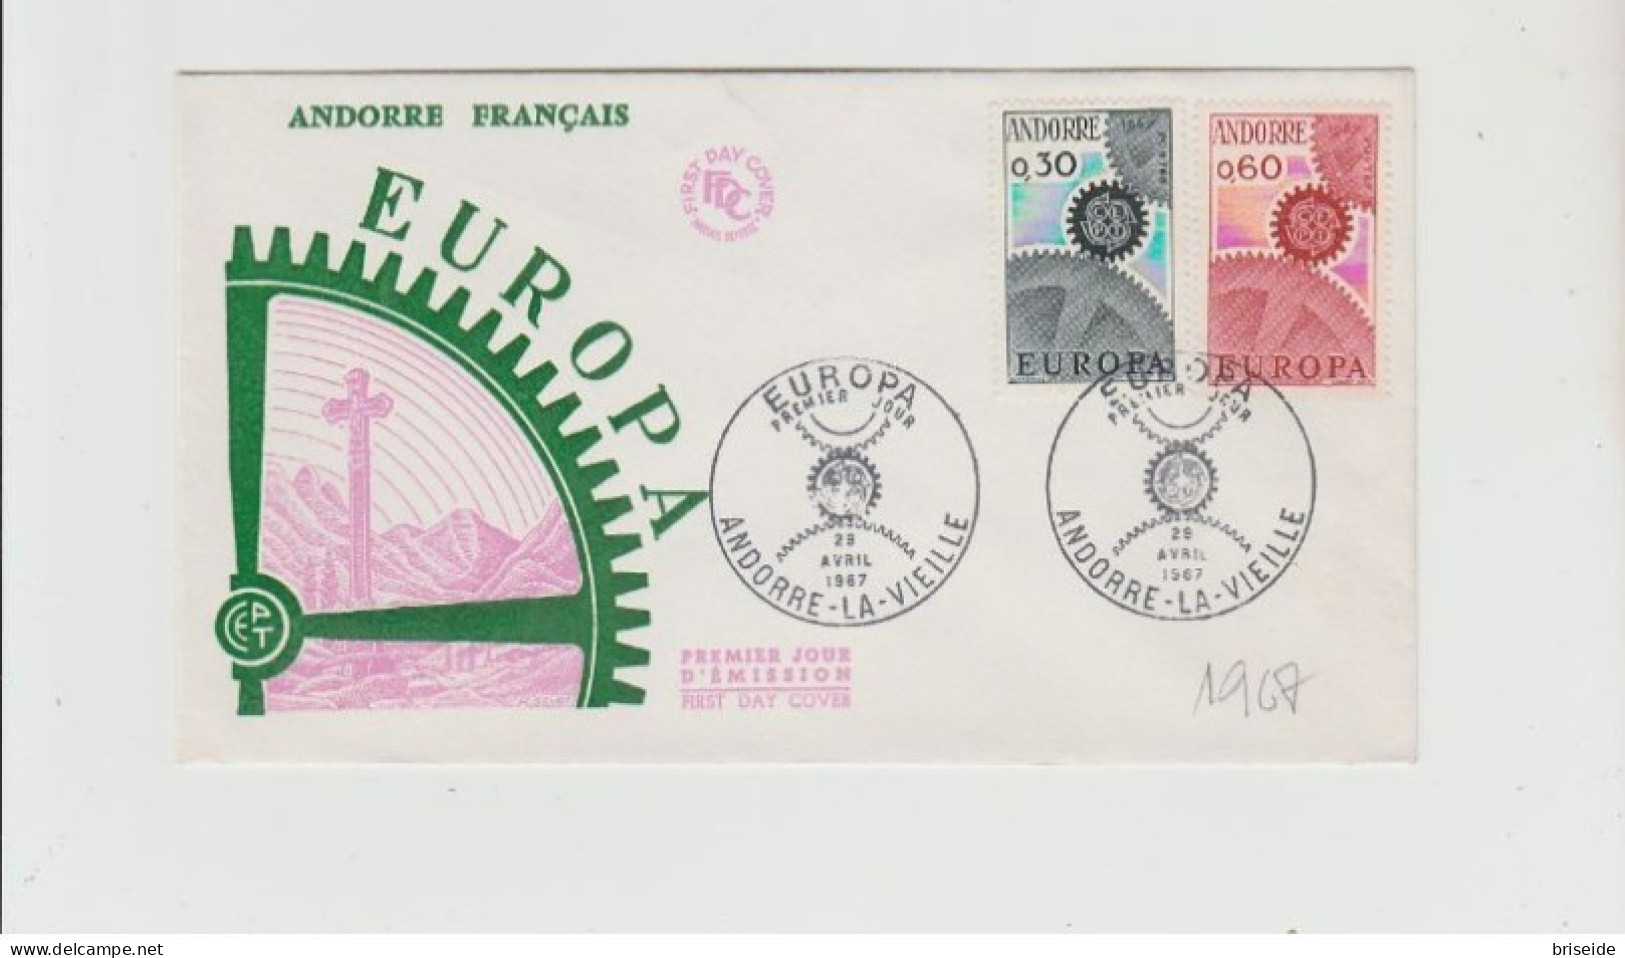 1967 N.1 BUSTA EUROPA CEPT PREMIER JOUR D'EMISSION FIRST DAY COVER ERSTTAGSBRIEF 1°GIORNO EMISSIONE ANDORRE - 1967